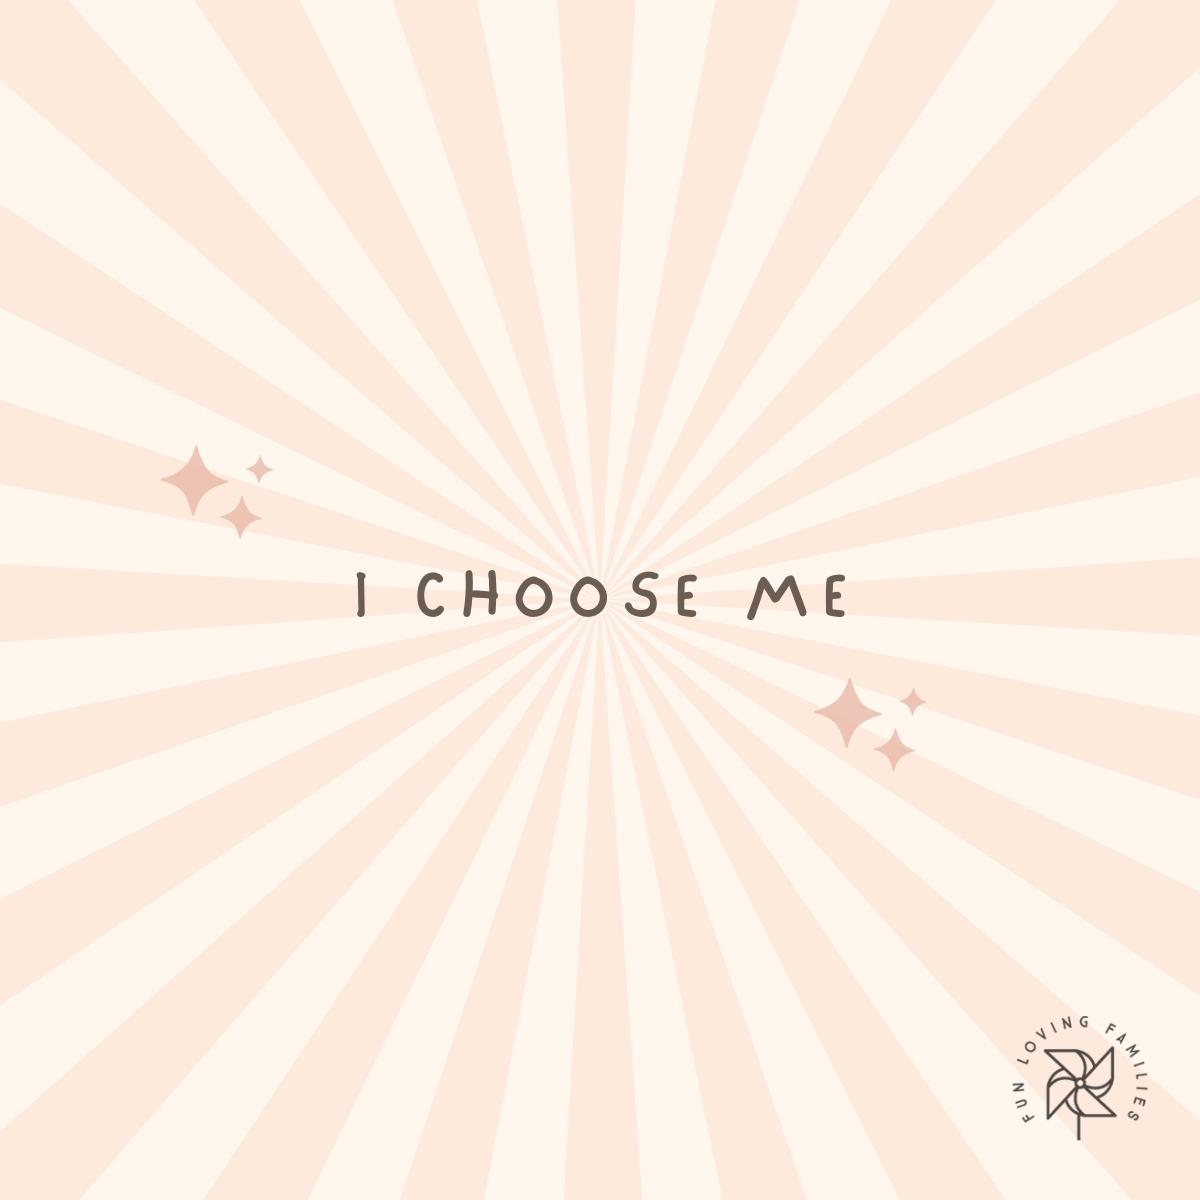 I choose me. affirmations